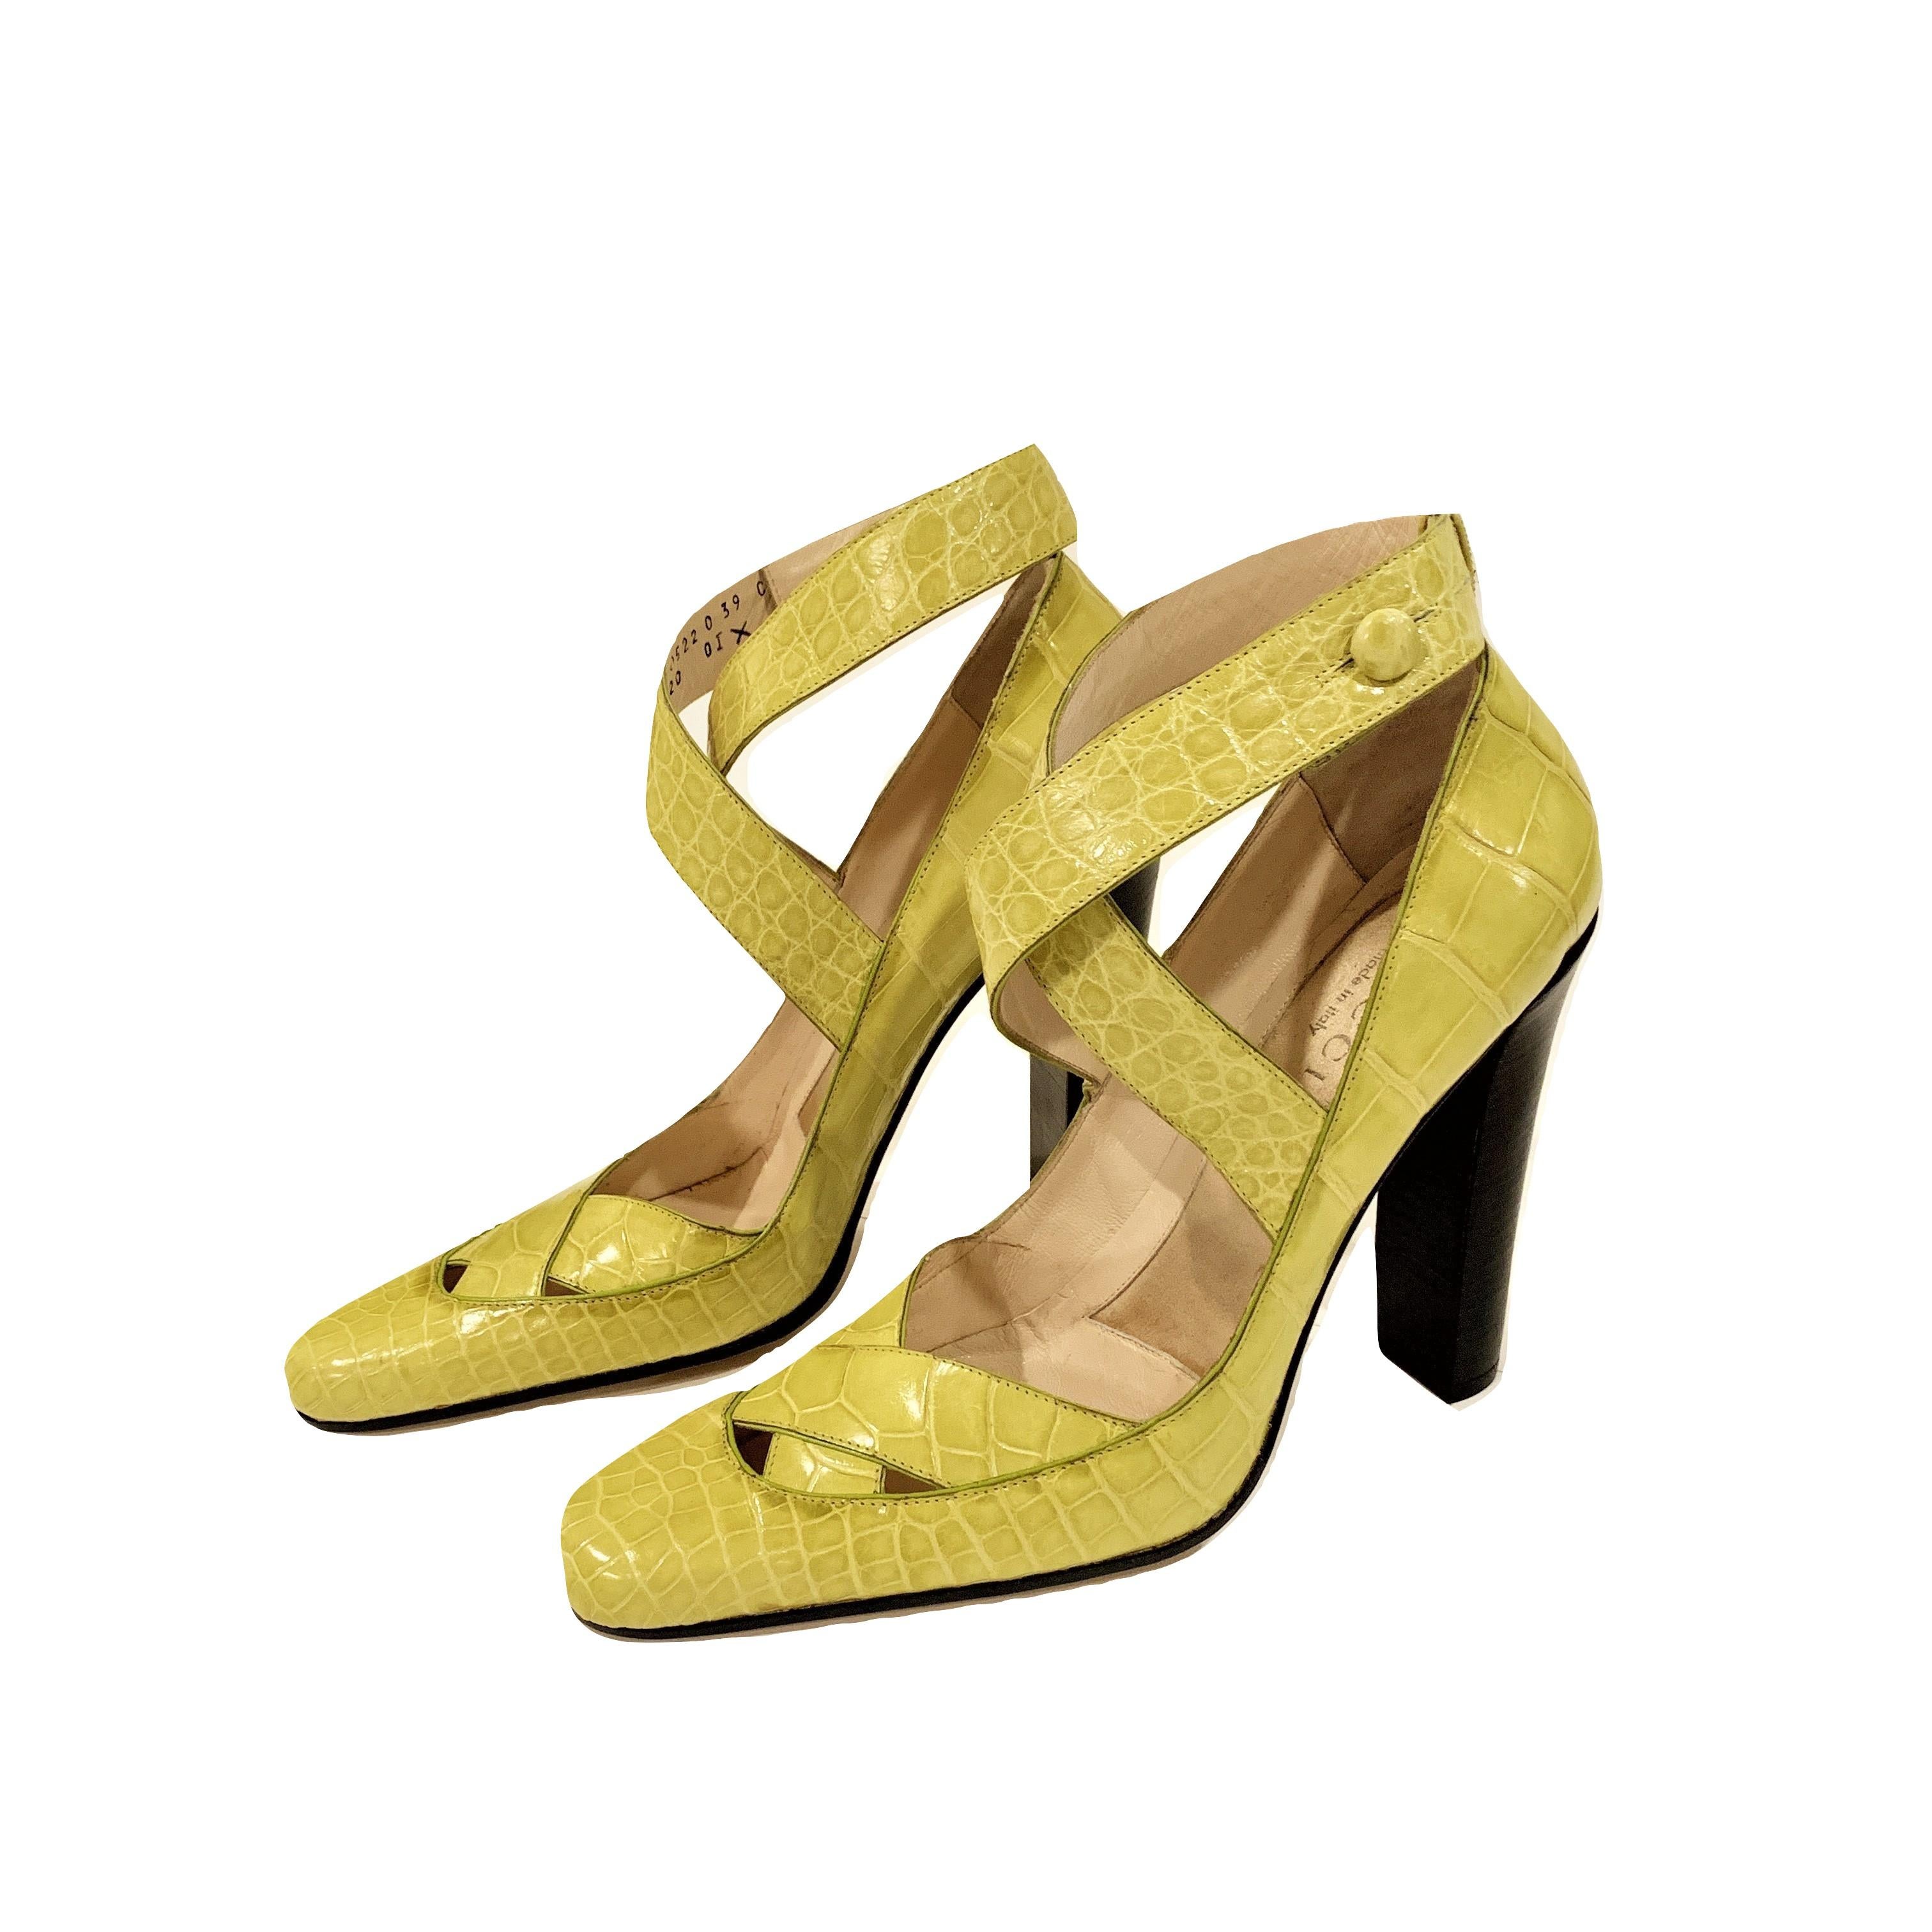 Neu Tom Ford for Gucci Krokodil Ballerina Heels Pumps in Light Chartreuse Sz 39 5